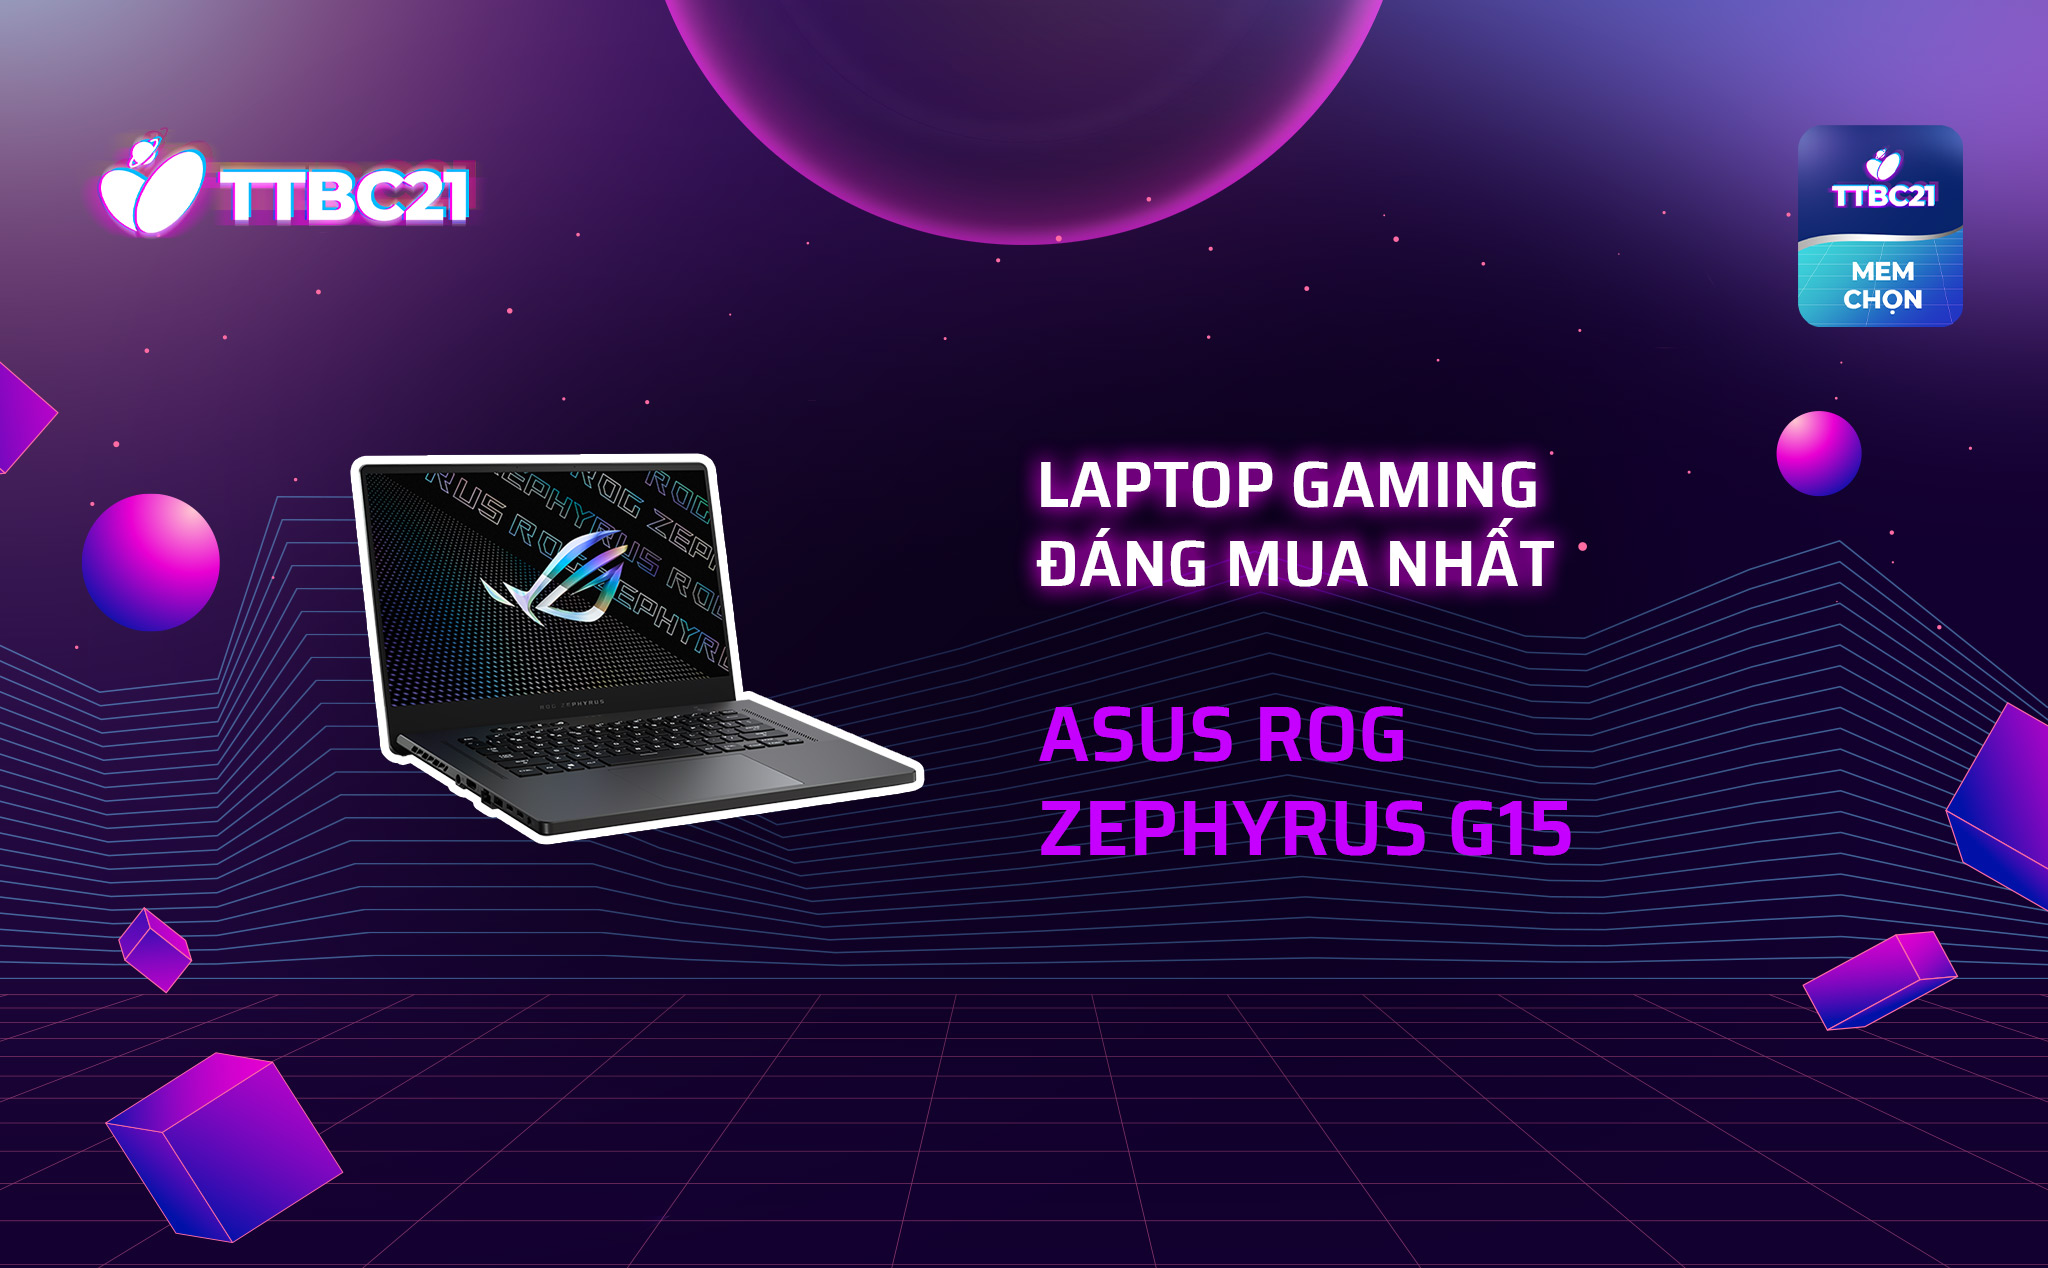 Laptop gaming đáng mua nhất - ASUS ROG ZEPHYRUS G15.jpg